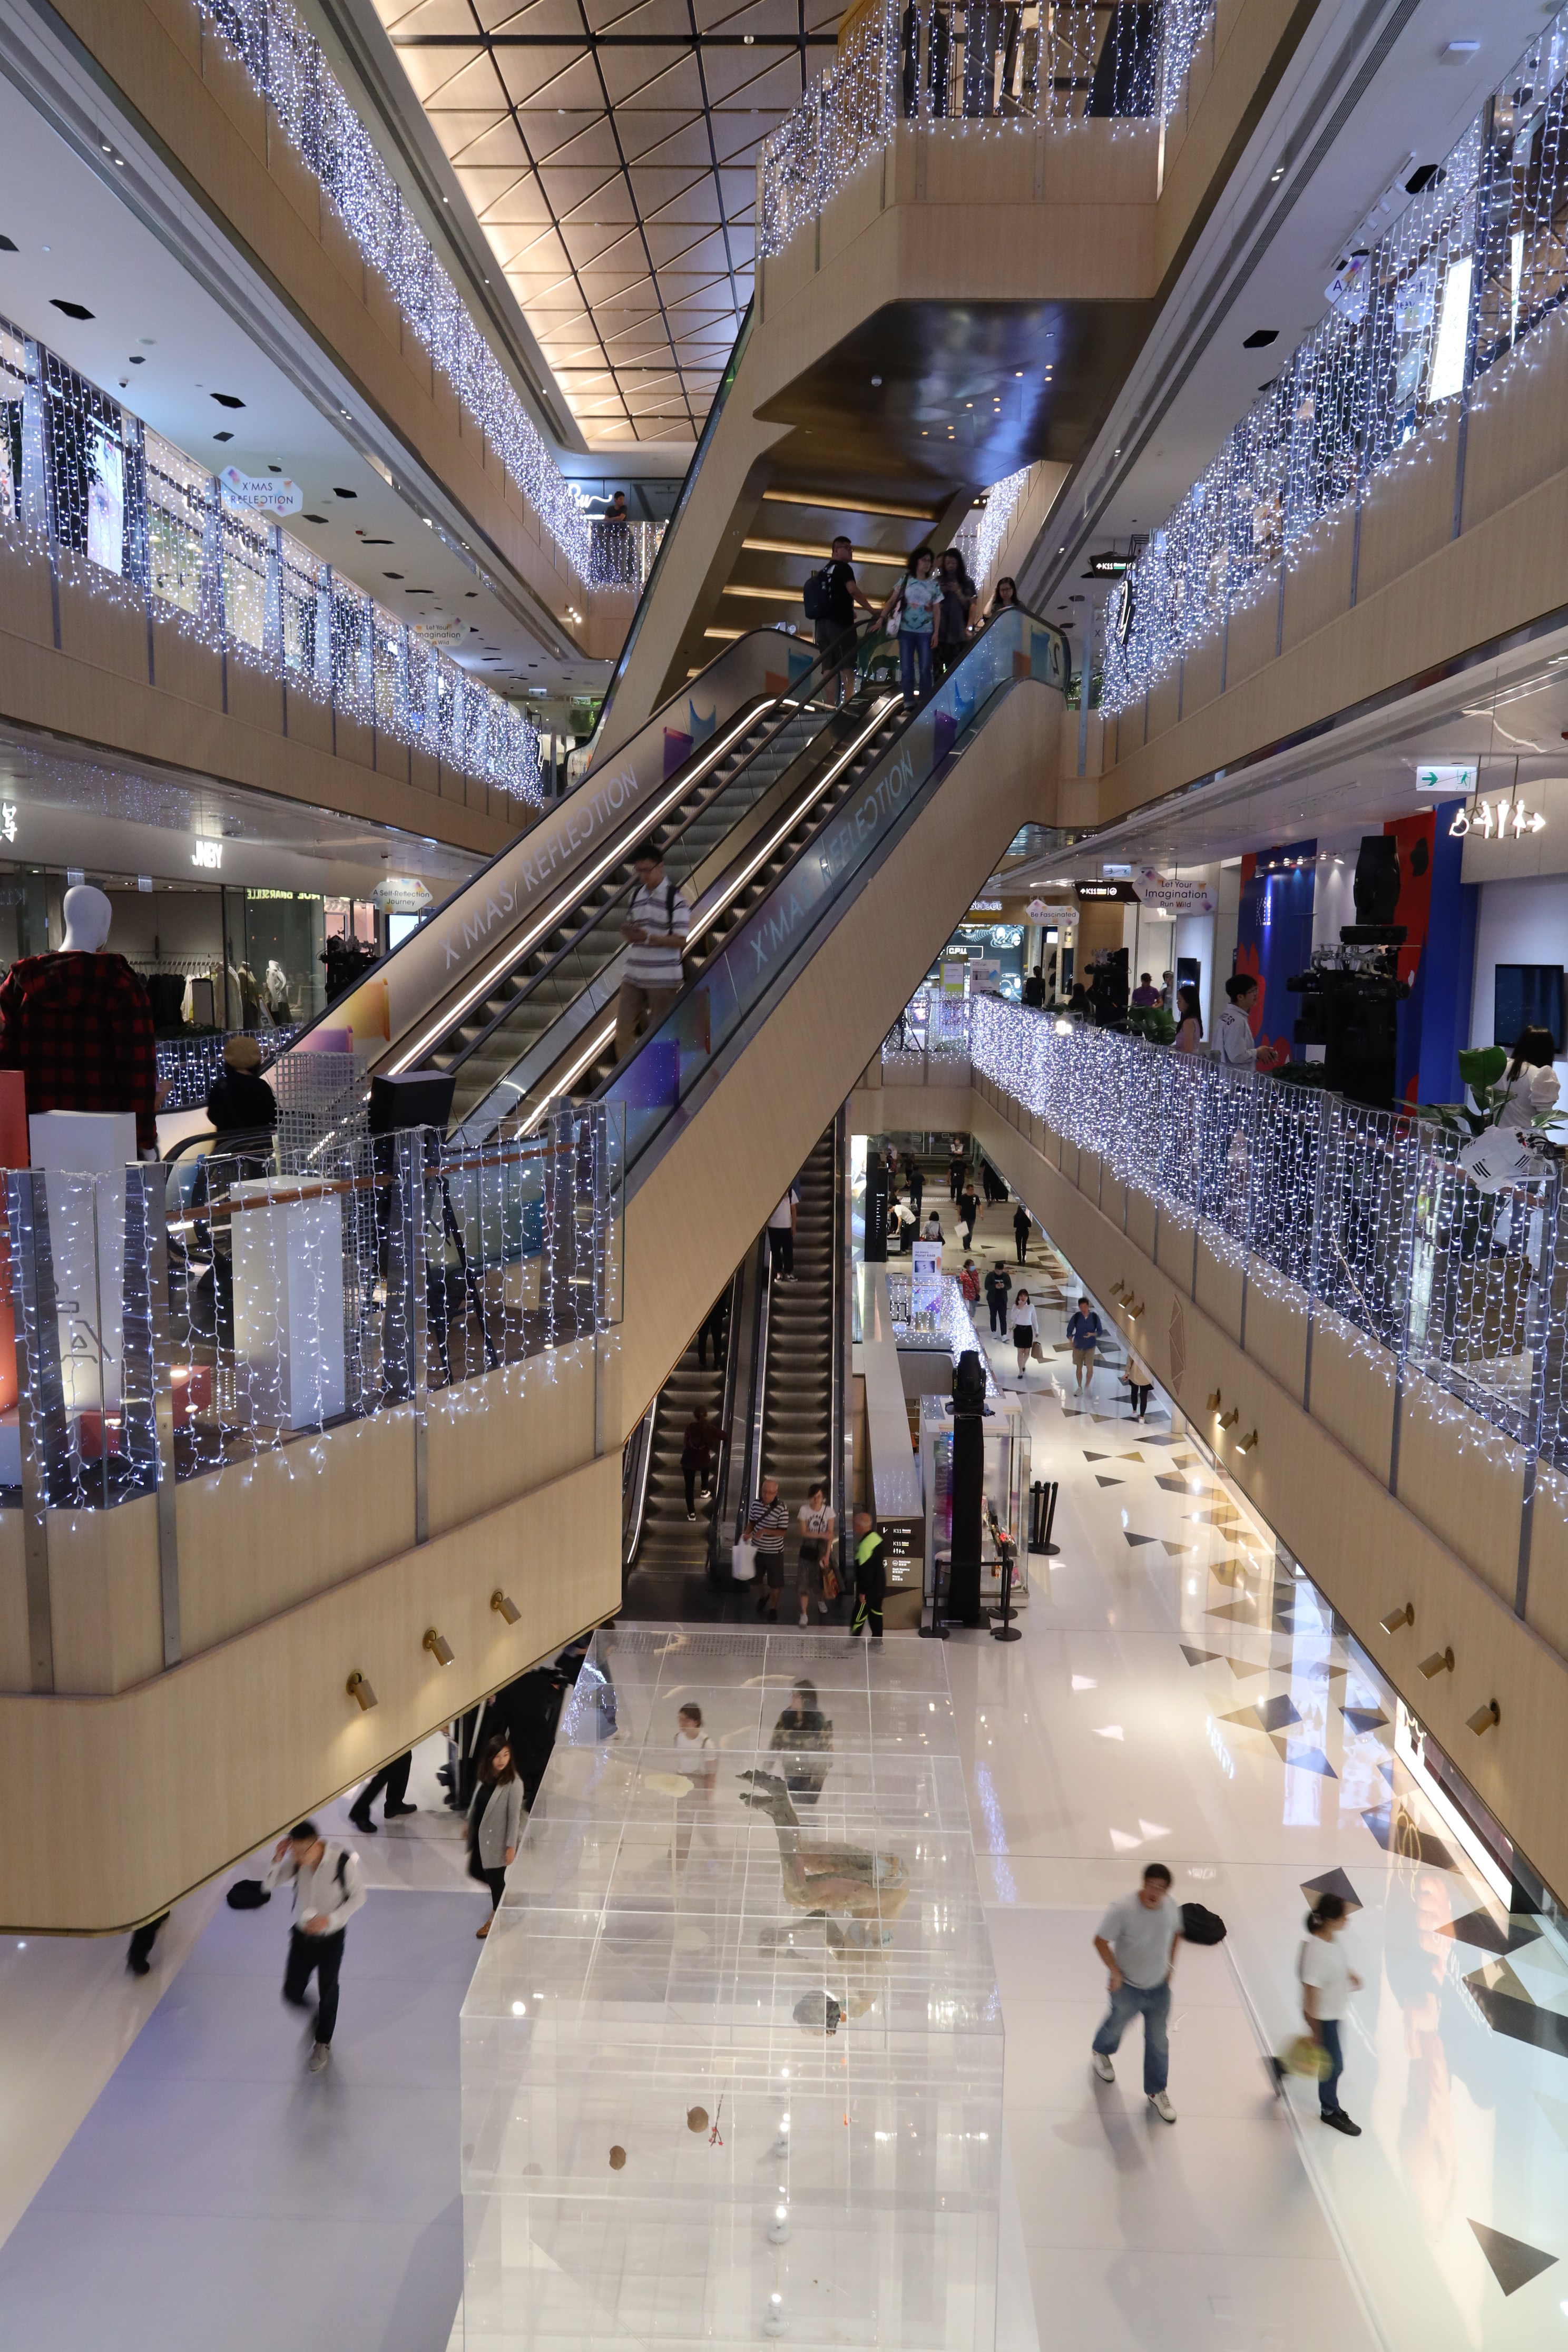 K11 Art Mall unveils new tenant mix ahead of Christmas season